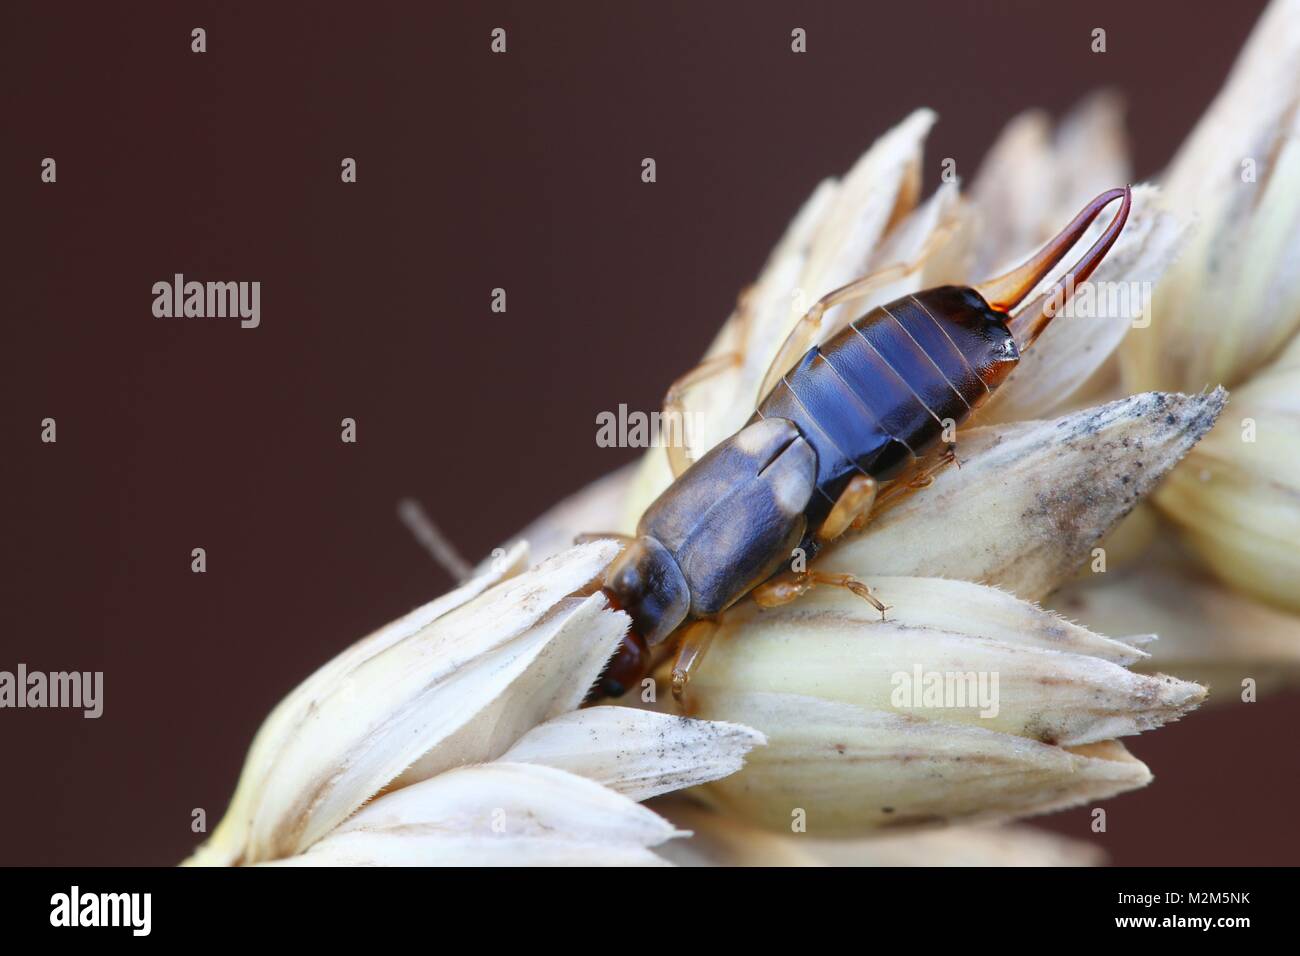 Common European earwig, Forficula auricularia Stock Photo